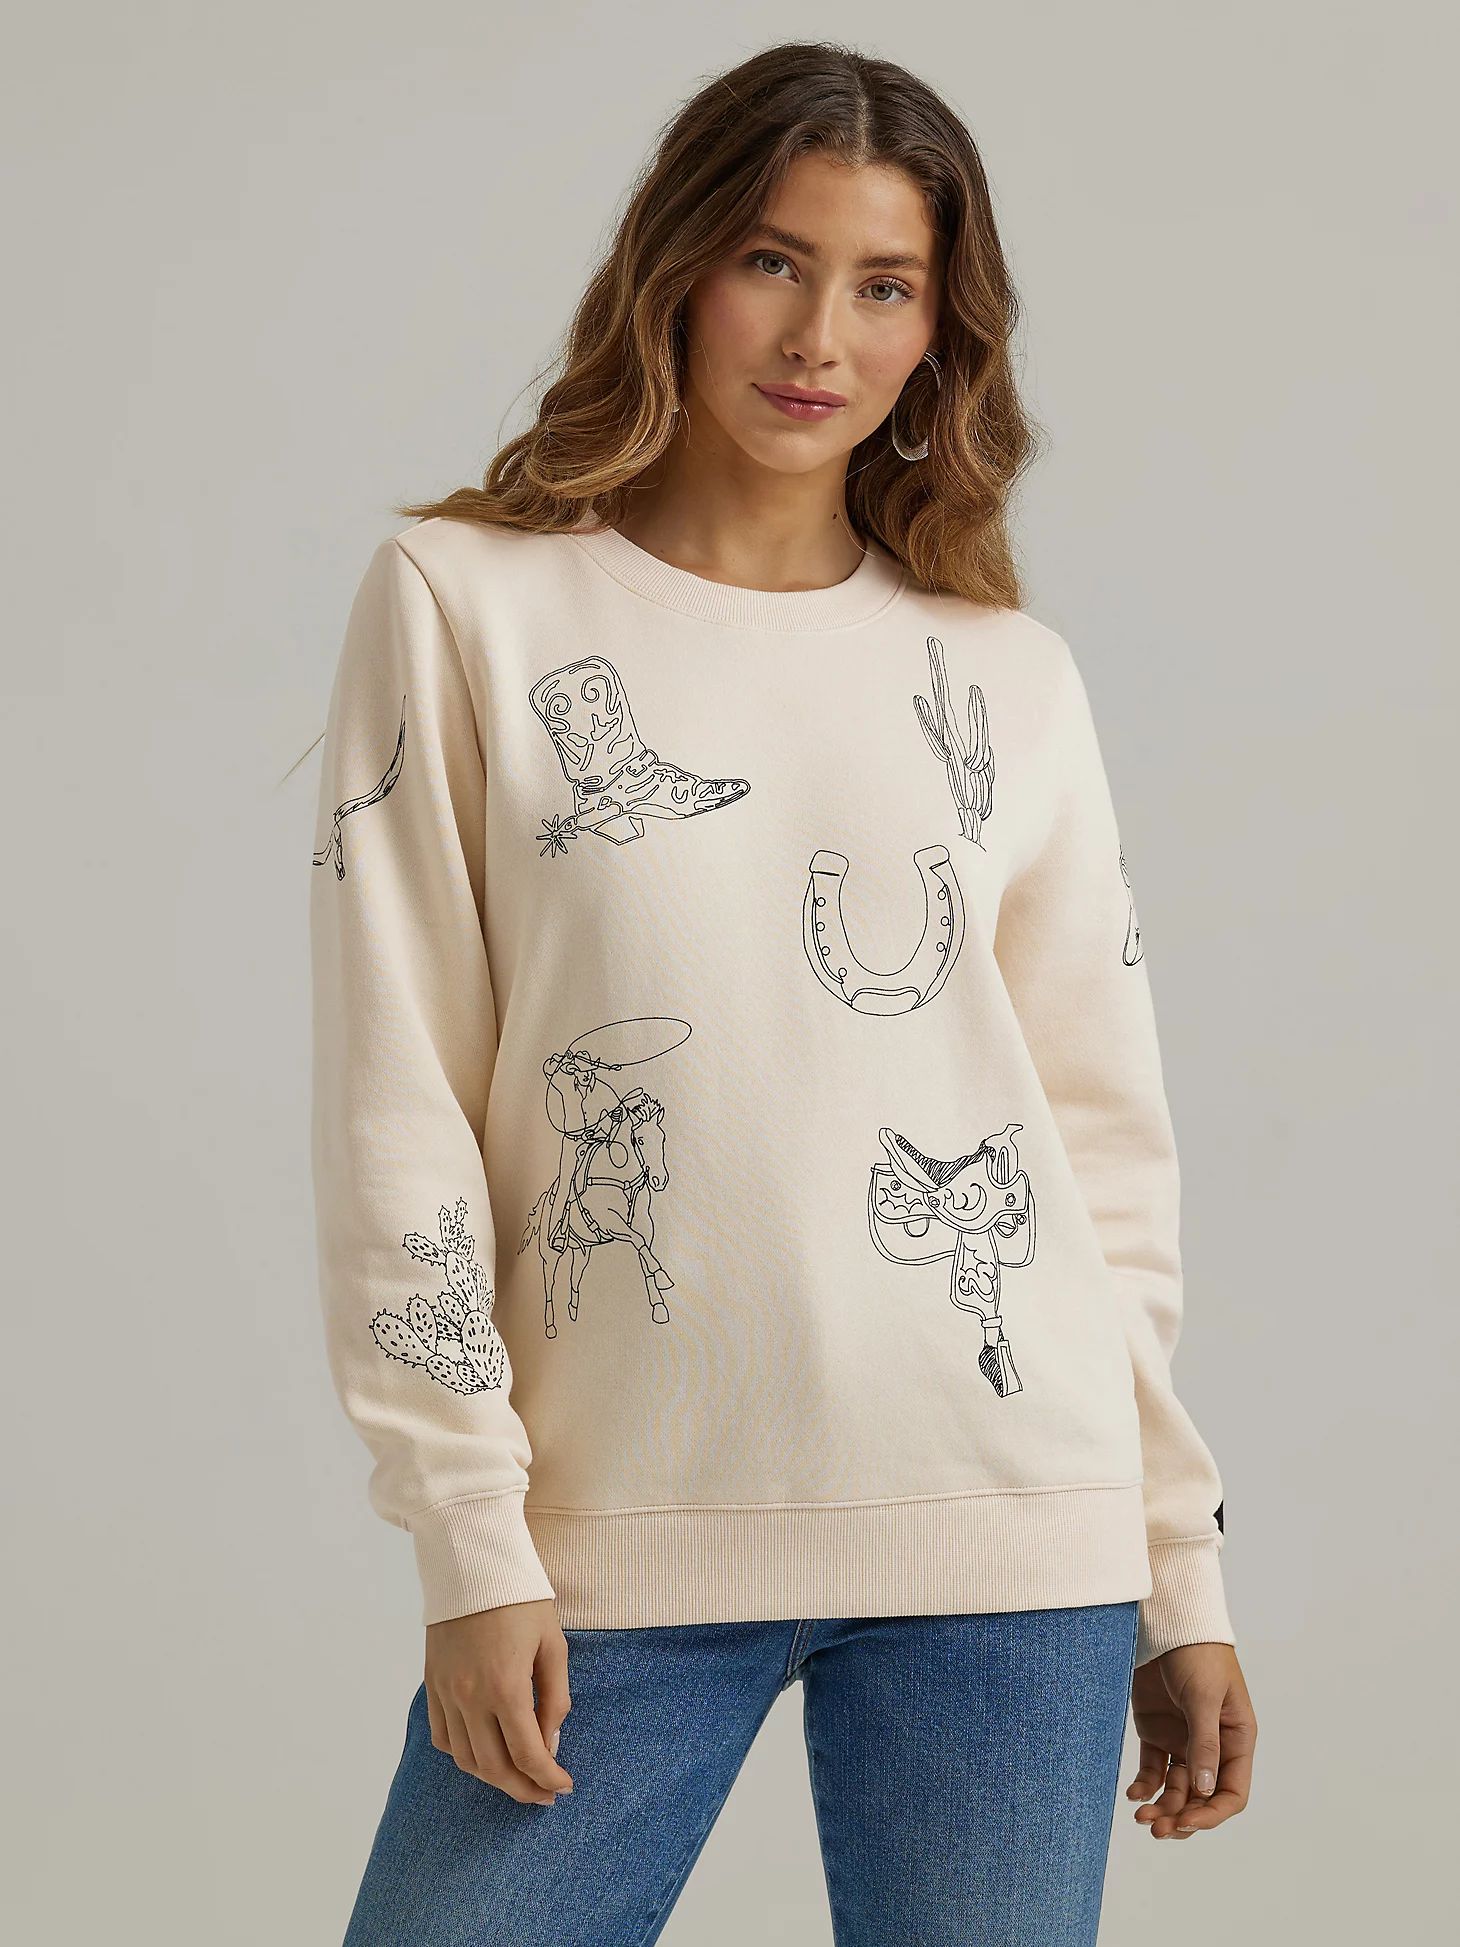 Women's Wrangler Cowboy Icons Pullover Sweatshirt in Egret | Wrangler